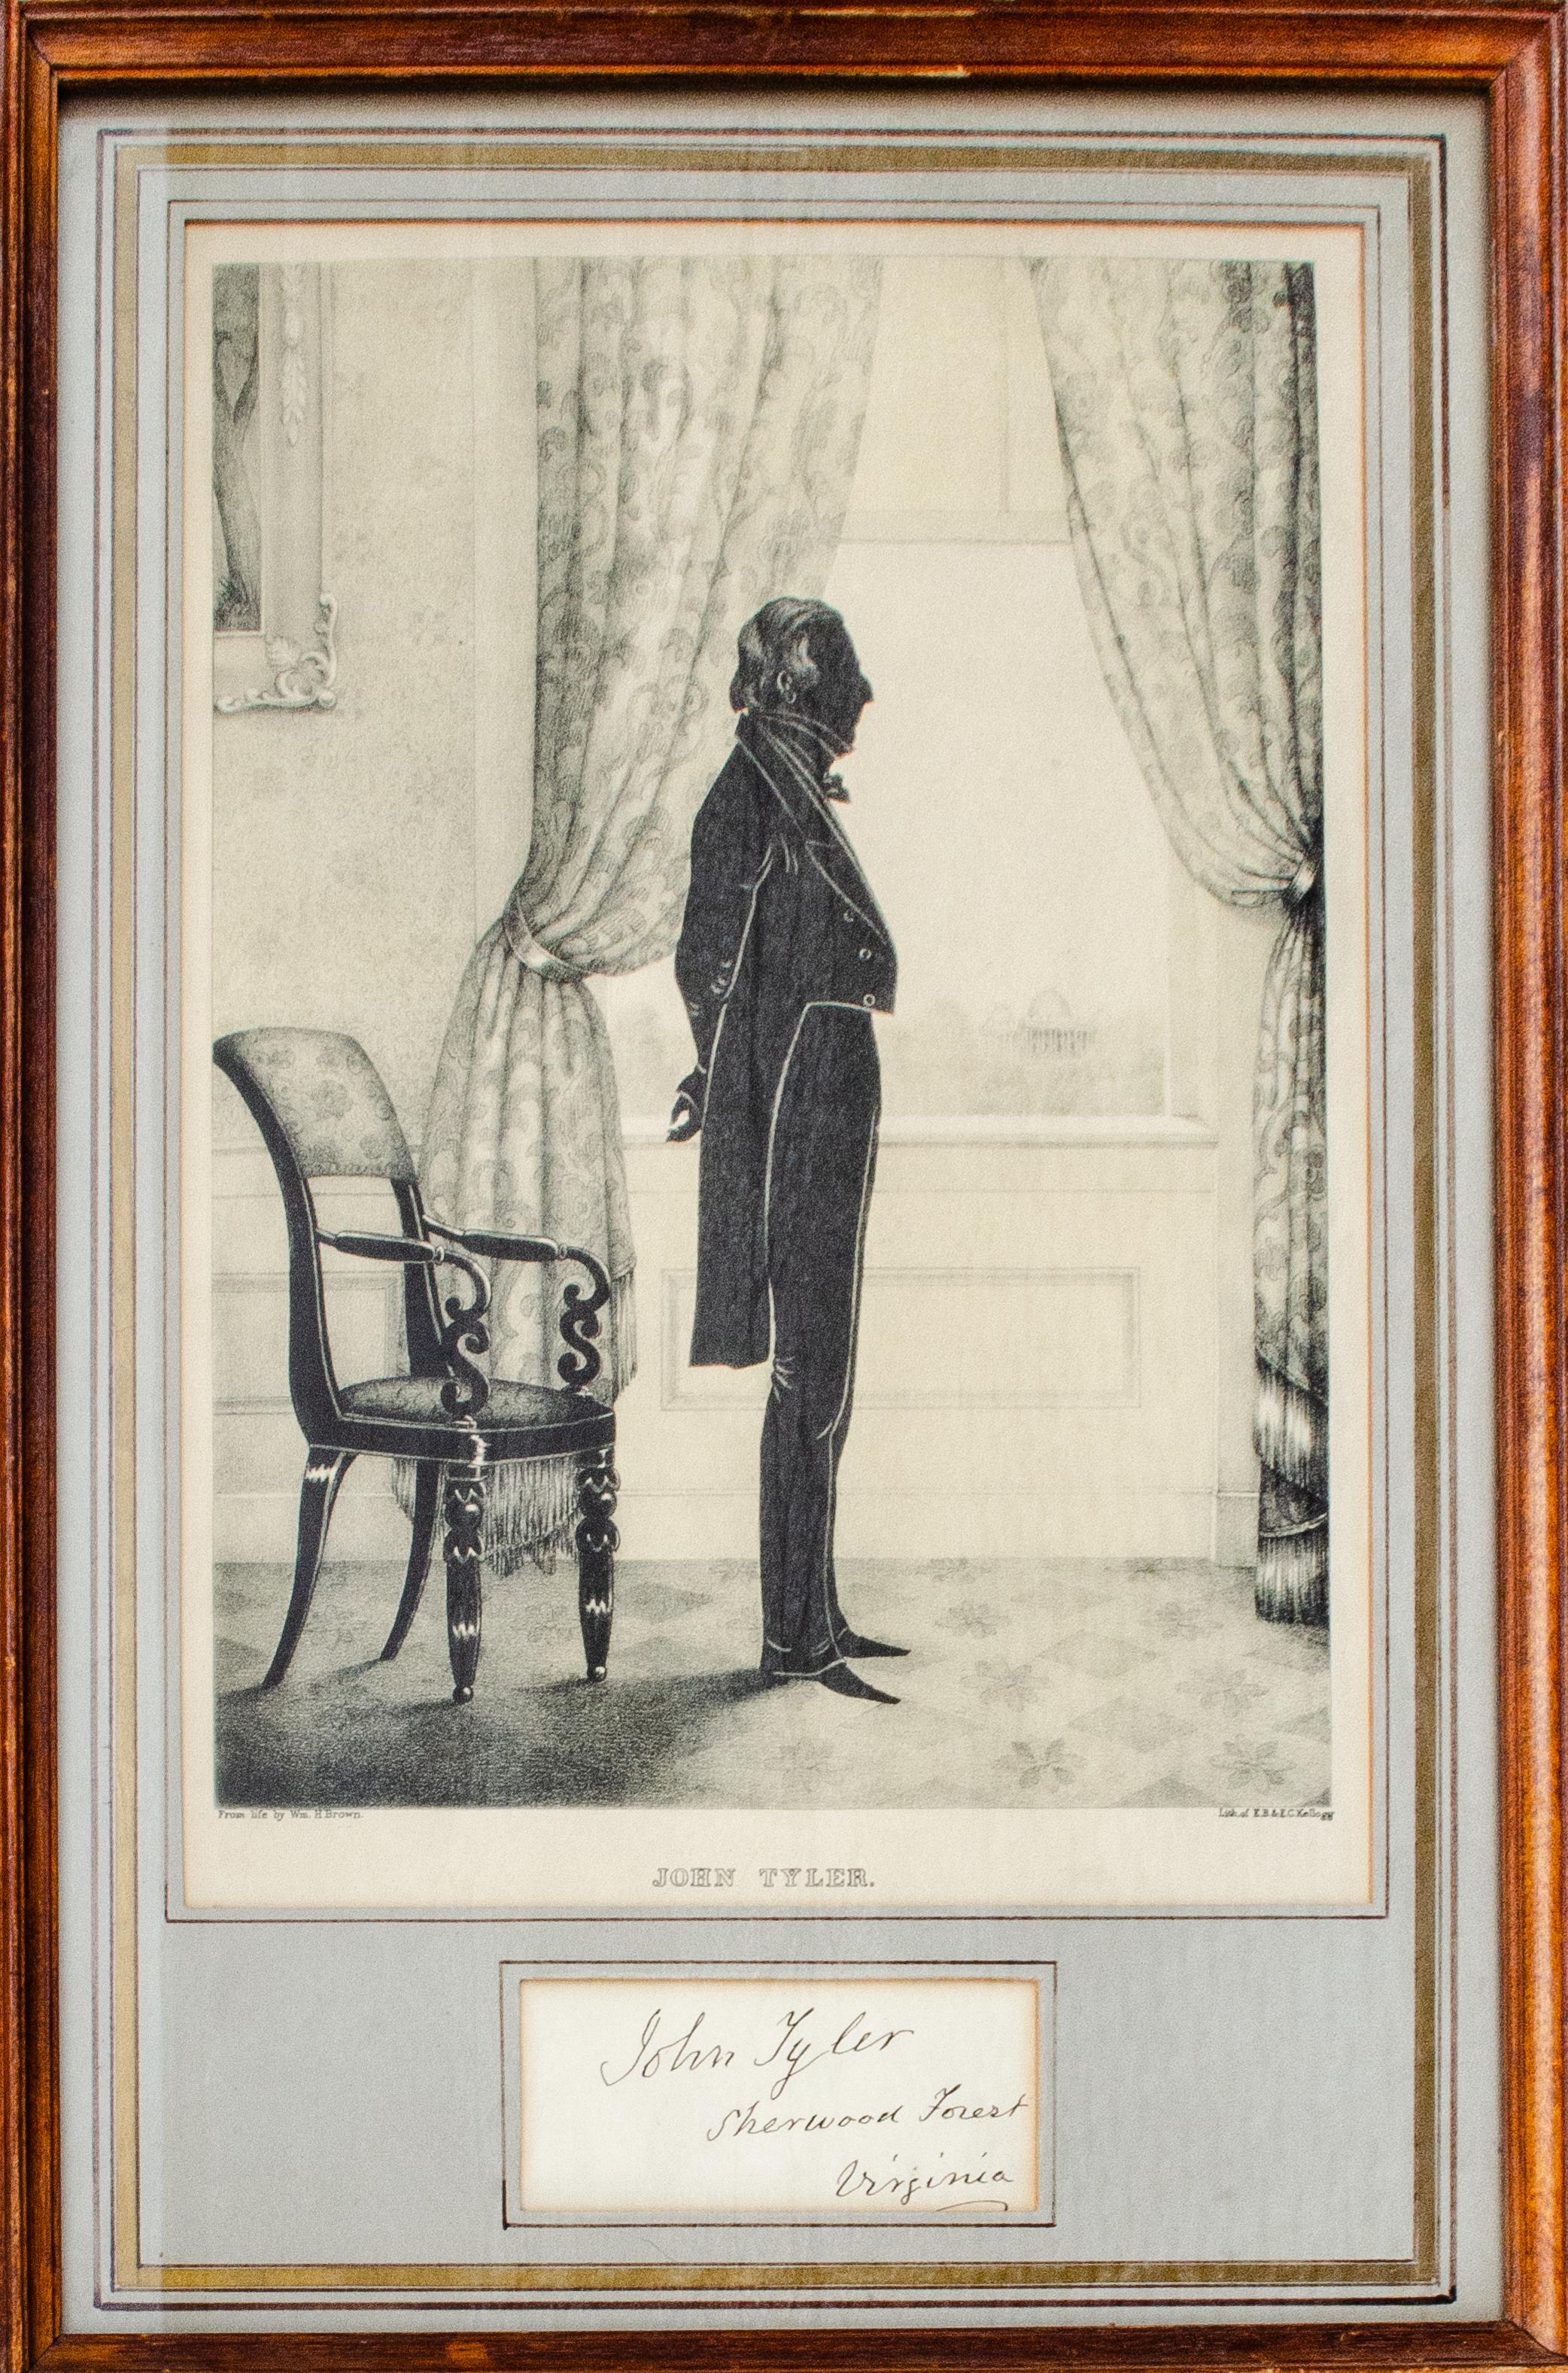 William H Brown Portrait Print - Presidential Portrait of John Tyler by William Henry Brown